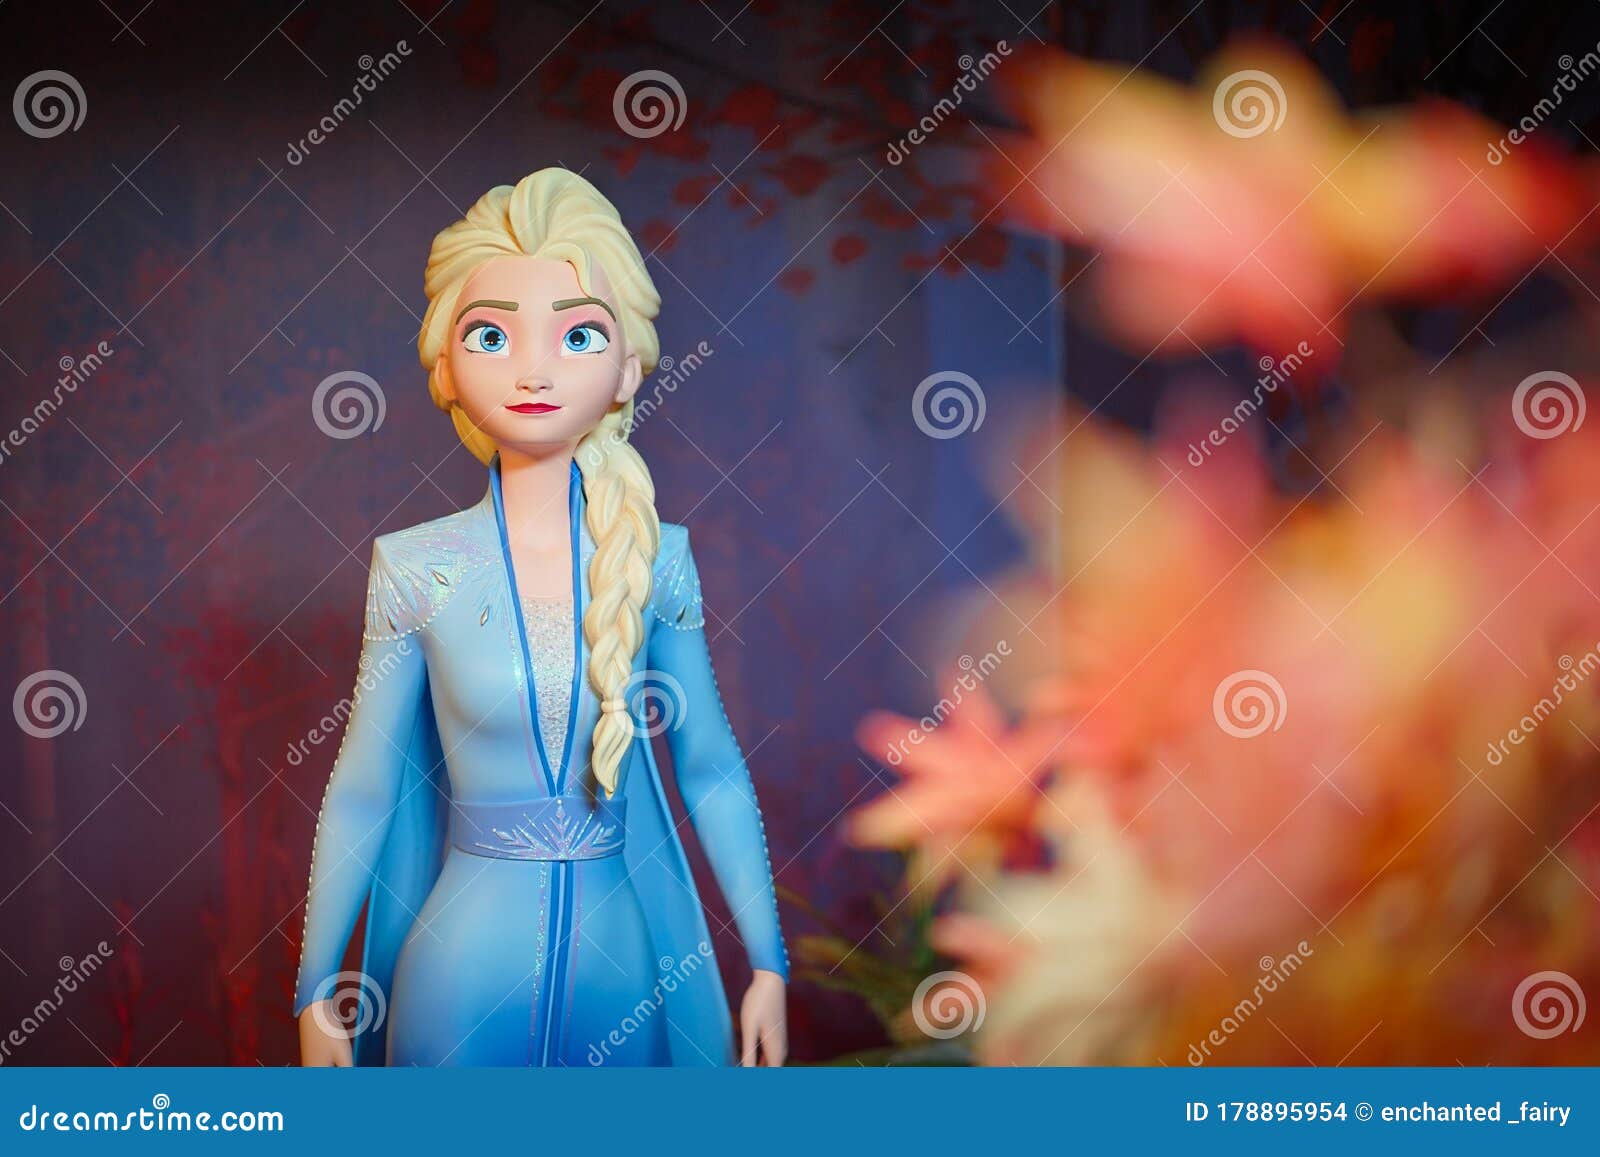 1,437 Elsa Frozen Stock Photos - Free & Royalty-Free Stock Photos from  Dreamstime